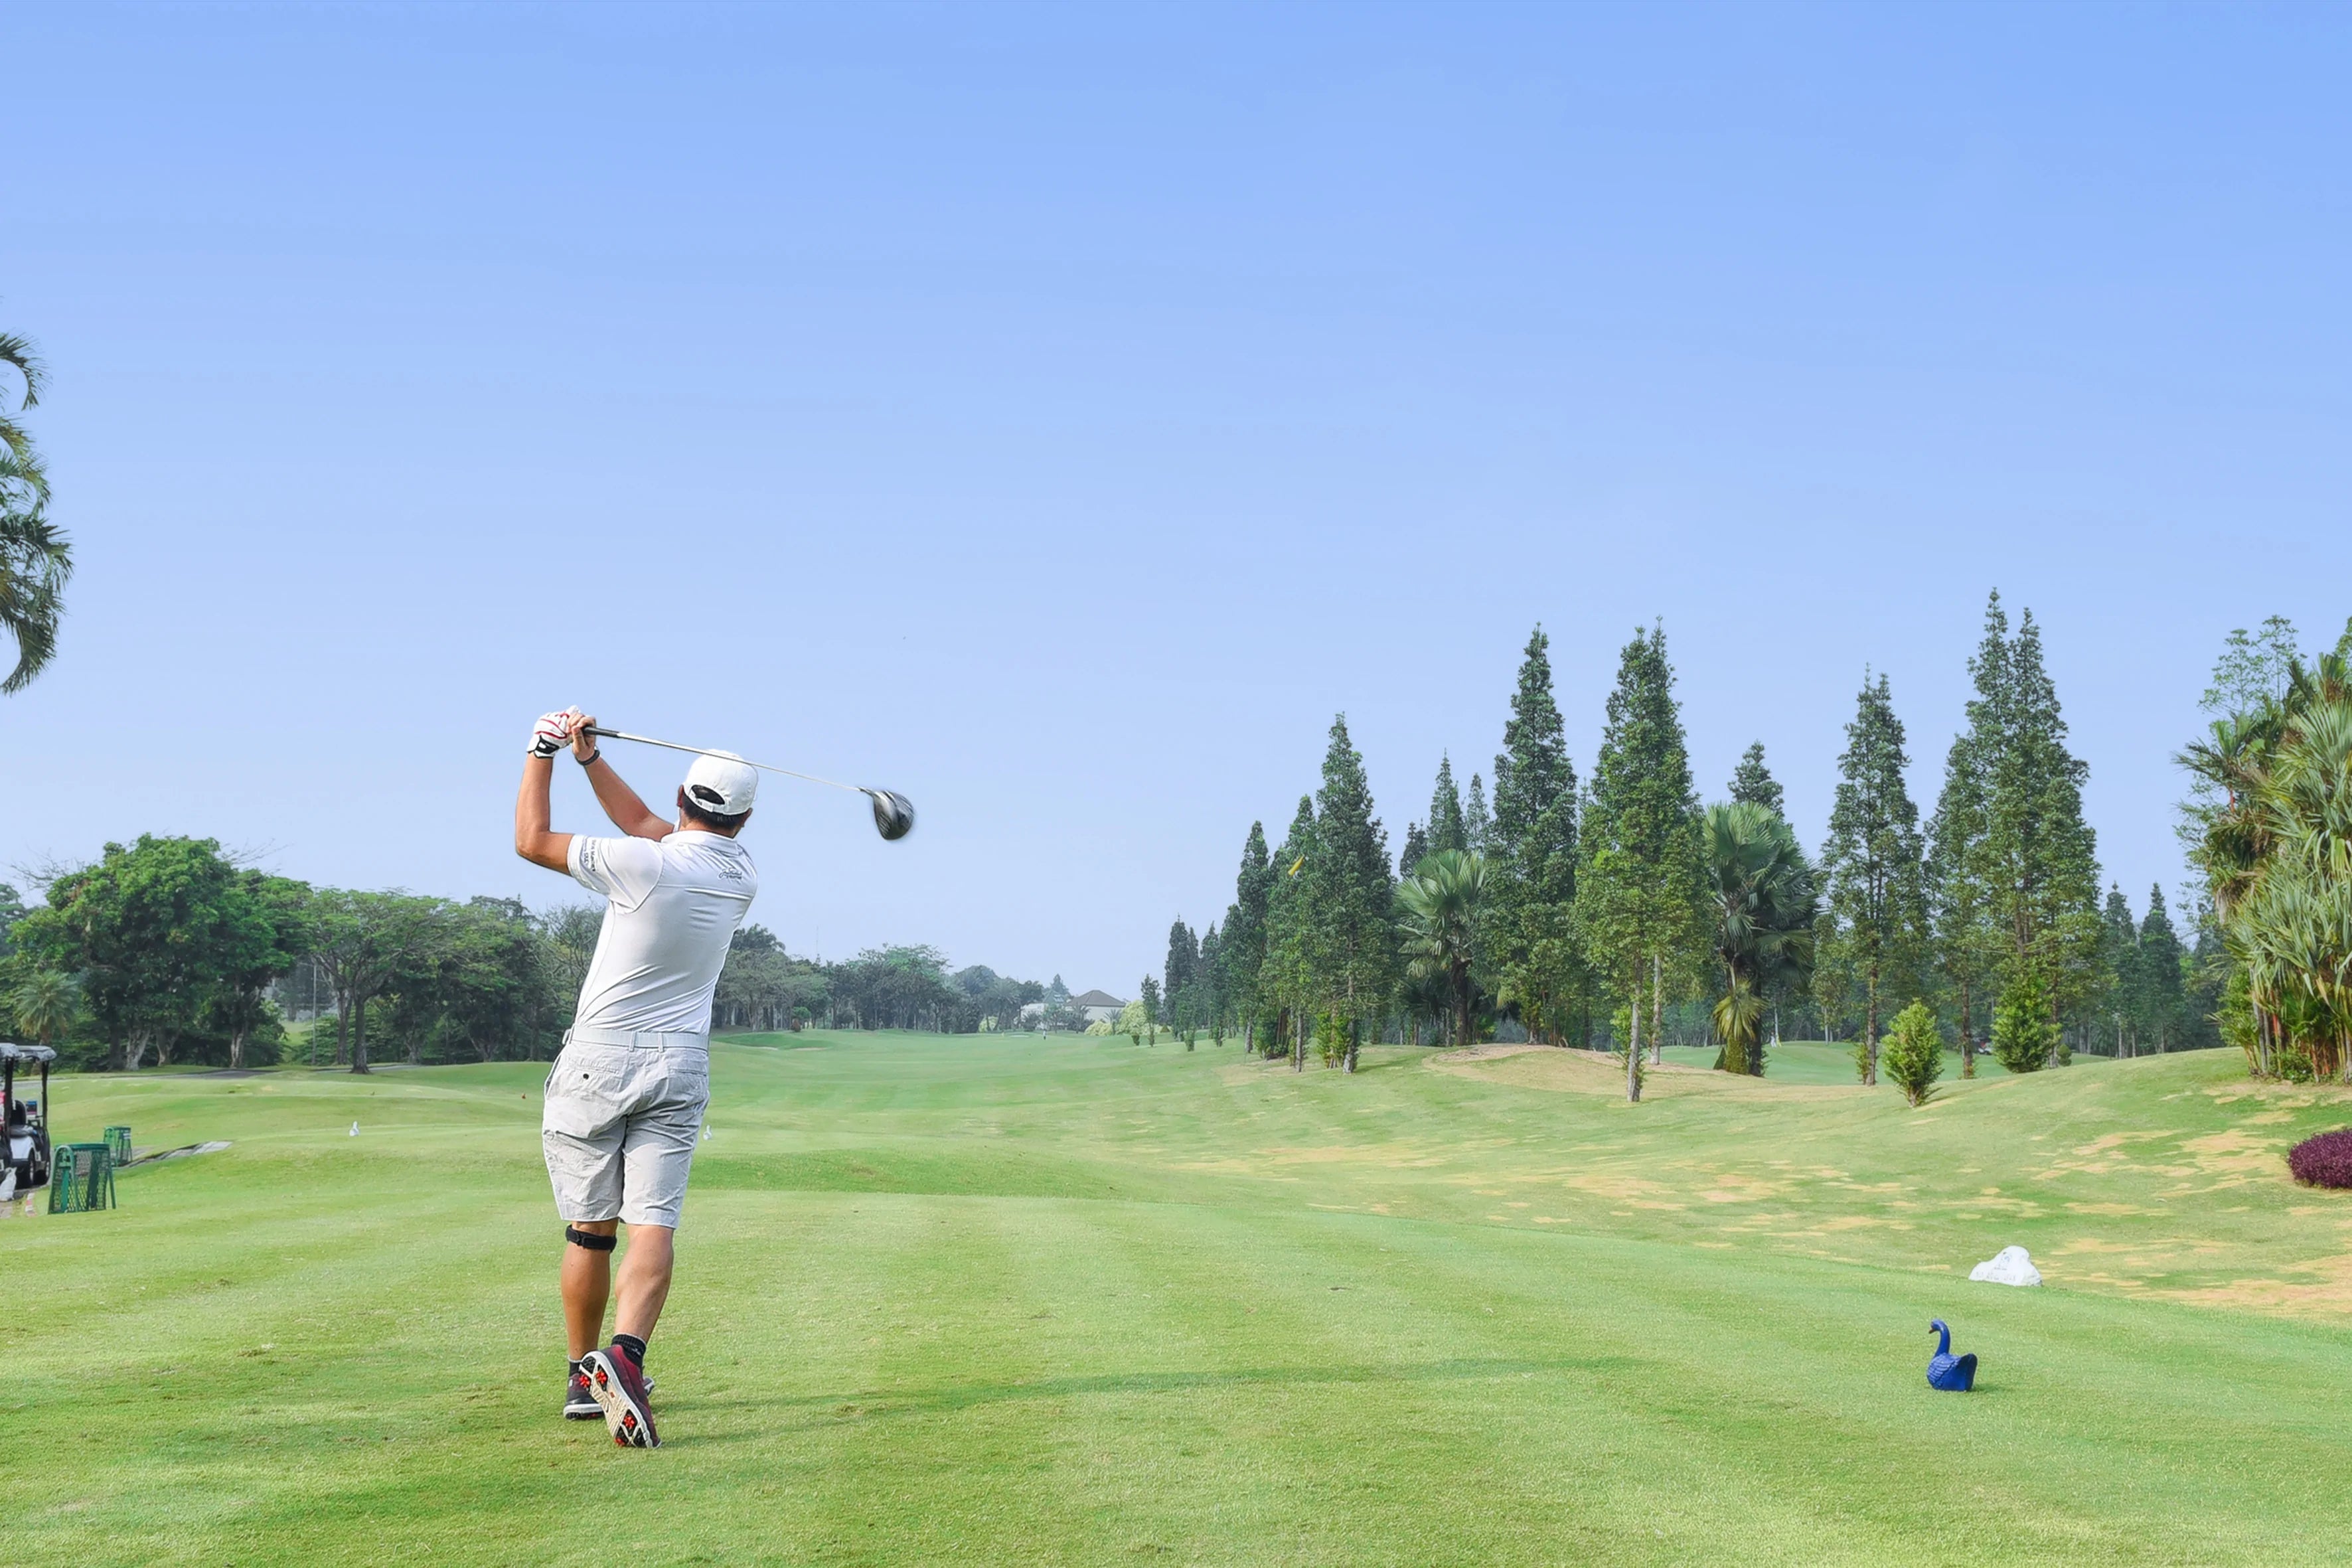 Stretches - The Healthy Golfer - Golf Fitness, Golf Health